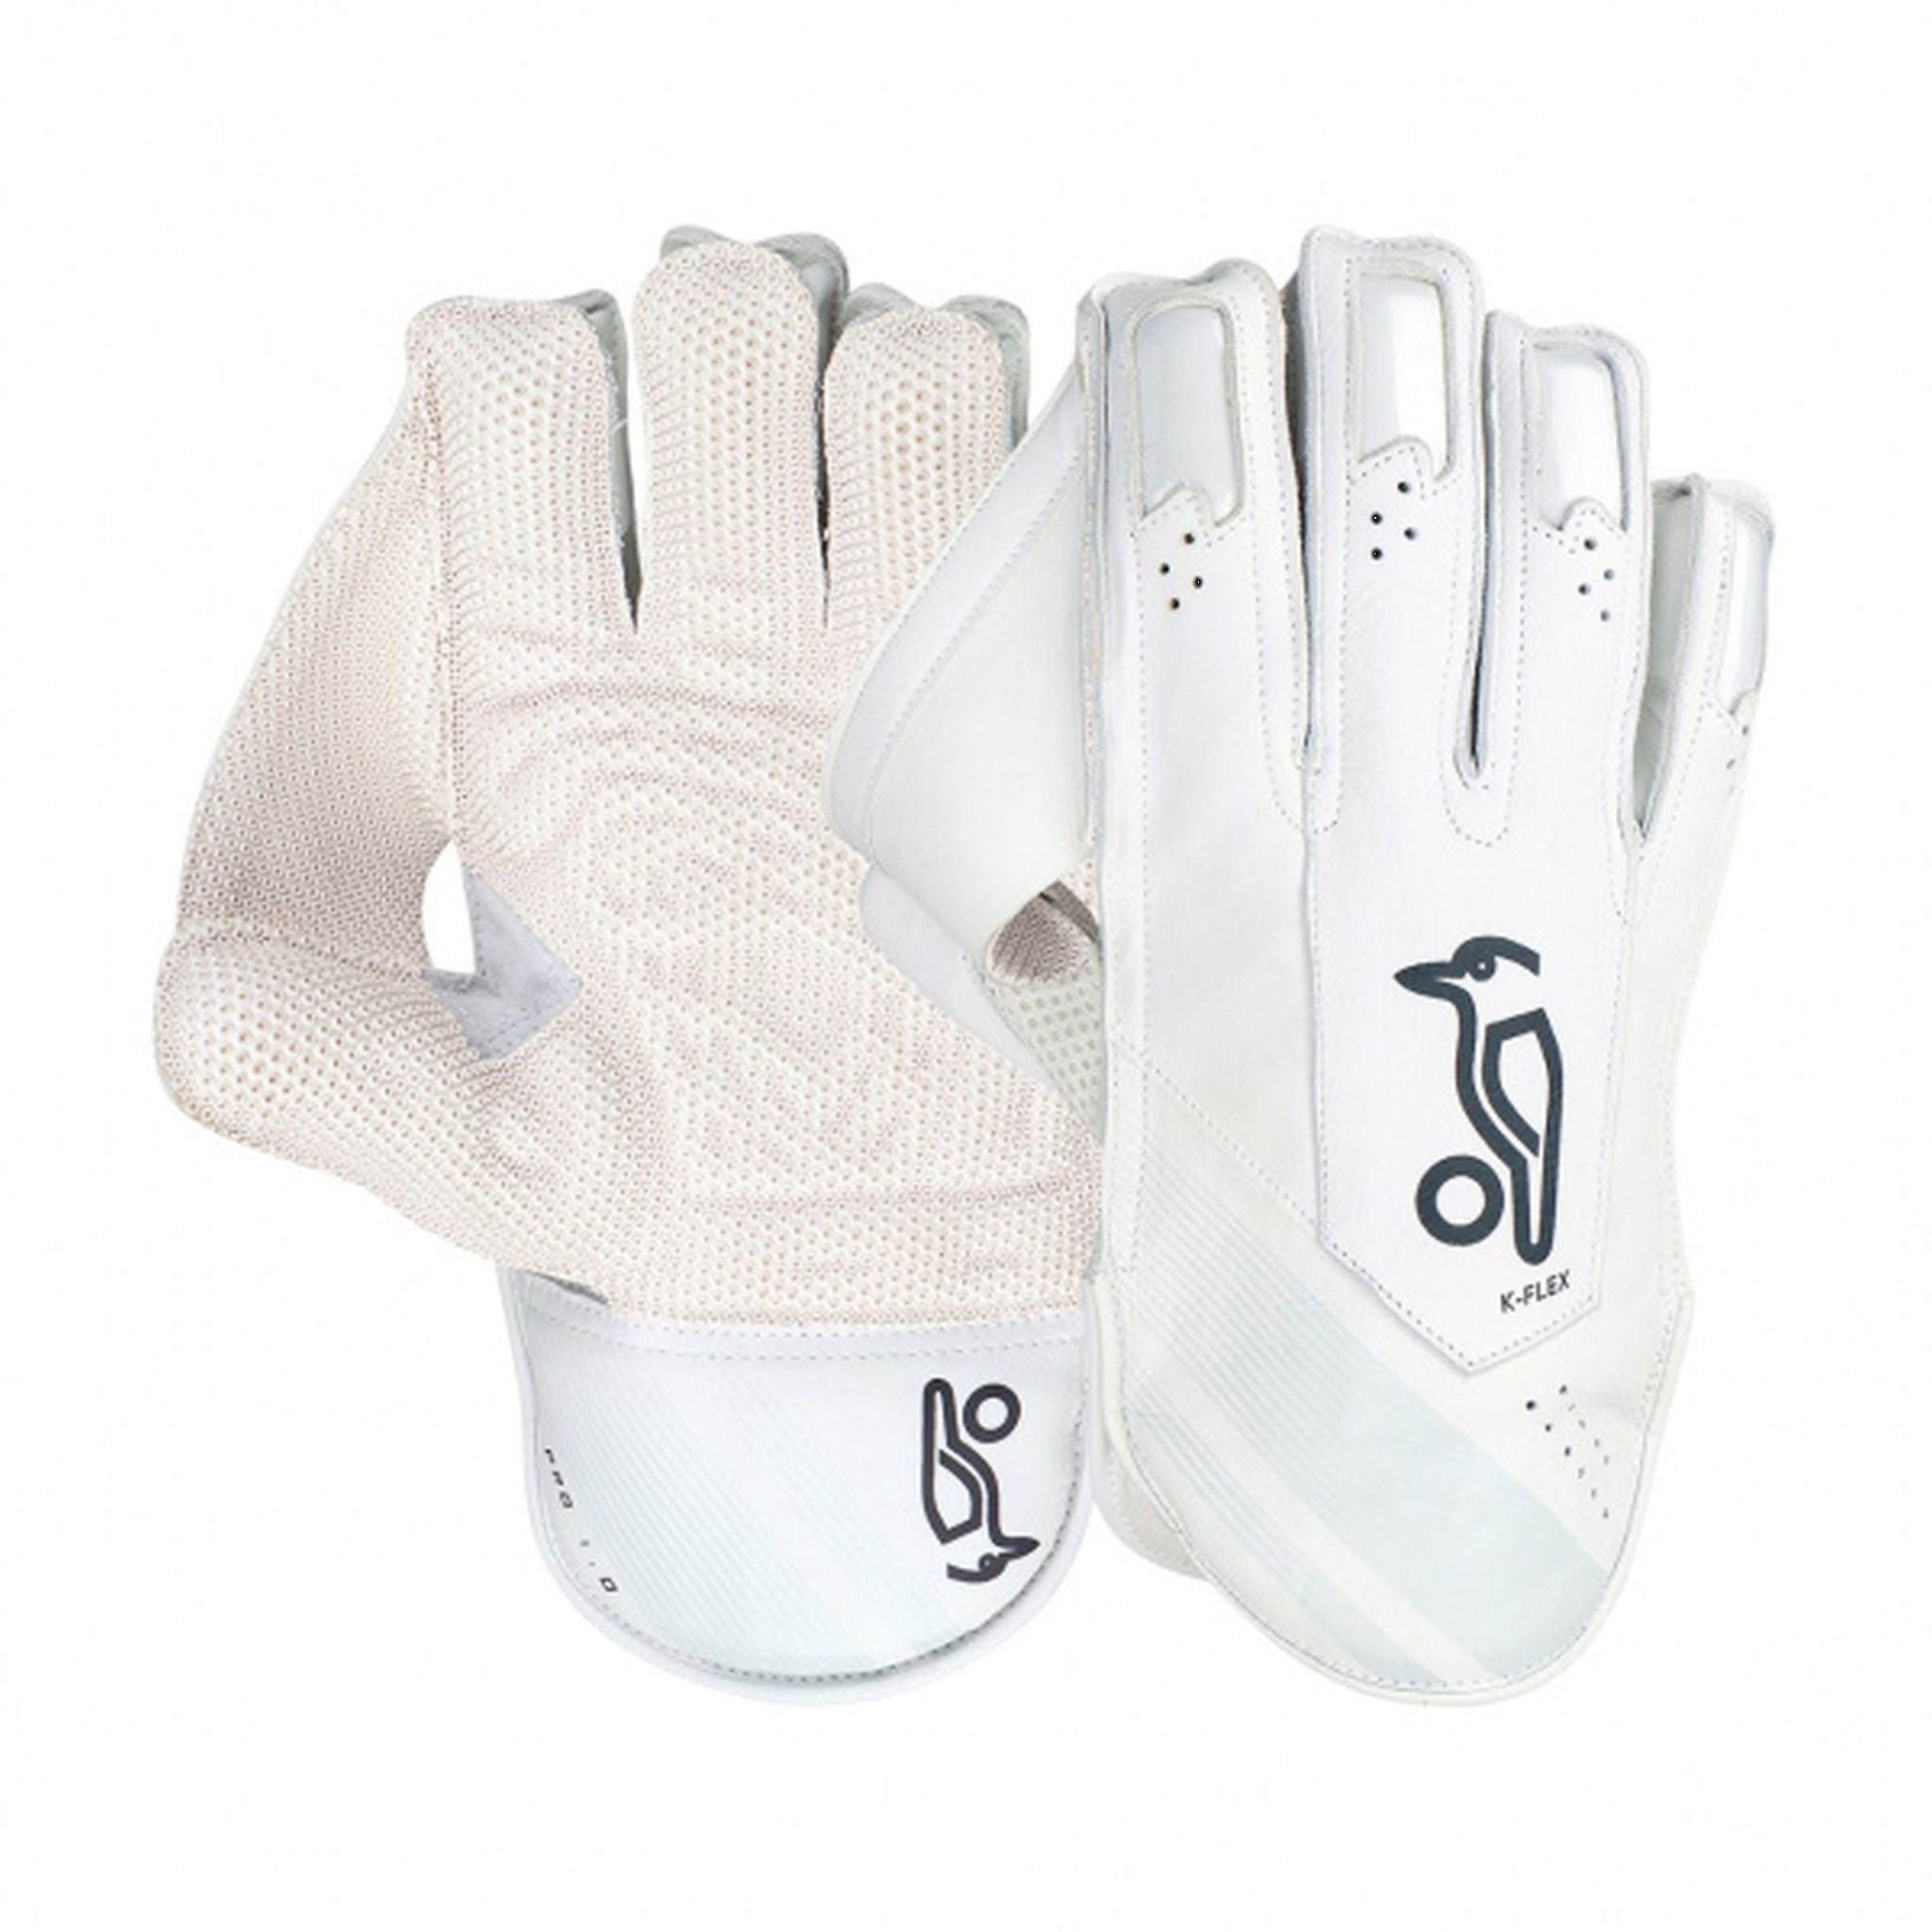 Kookaburra Pro 1.0 Adults Wicket Keeping Gloves